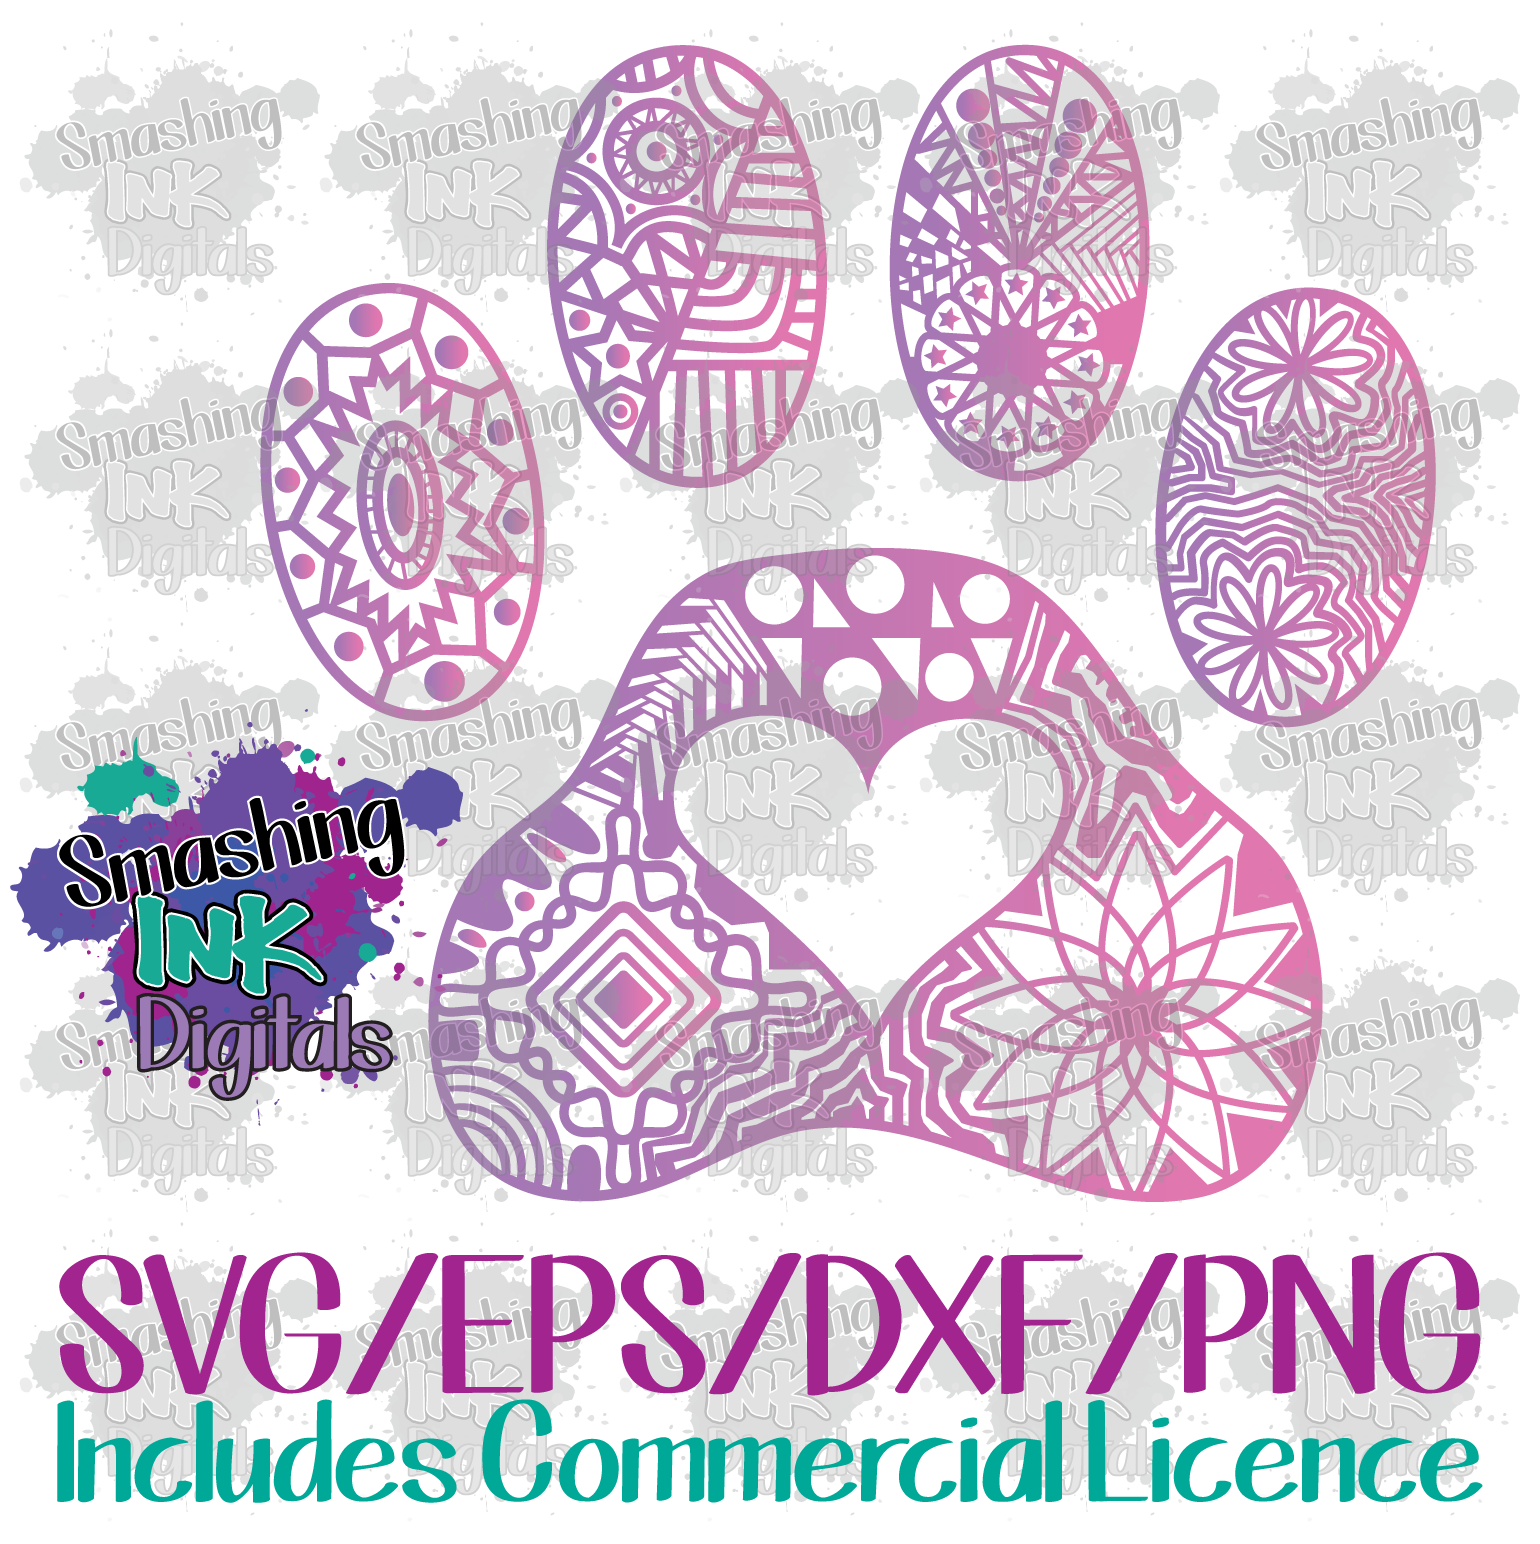 Free Free Free Paw Print Svg Cut File 522 SVG PNG EPS DXF File